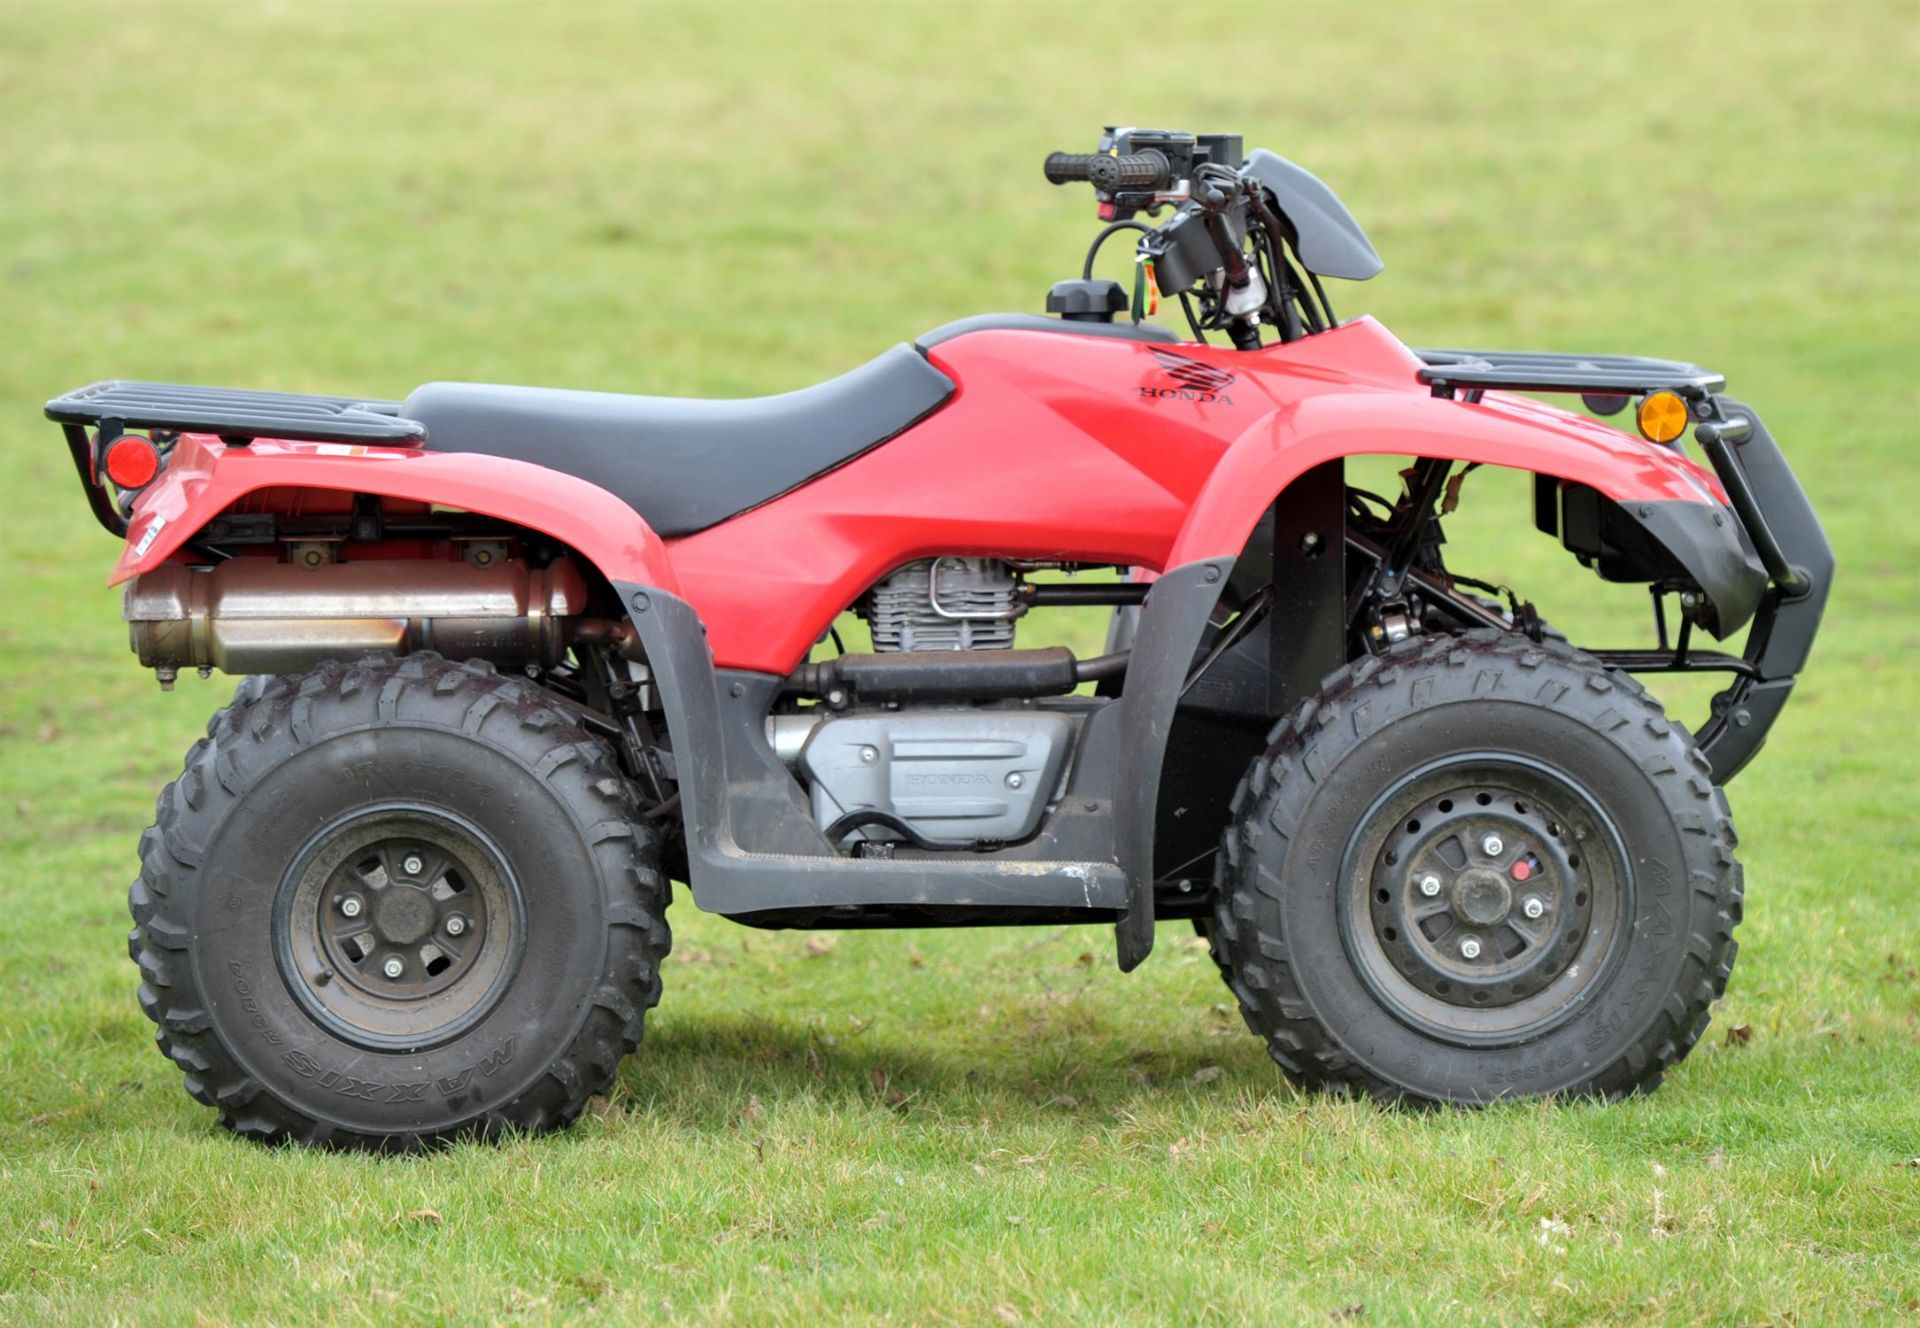 Honda Quad Bike ATV - TRX 250 TEM. Red. 250cc. - All wheel drive Honda Quad bike - One owner quad - Image 4 of 19